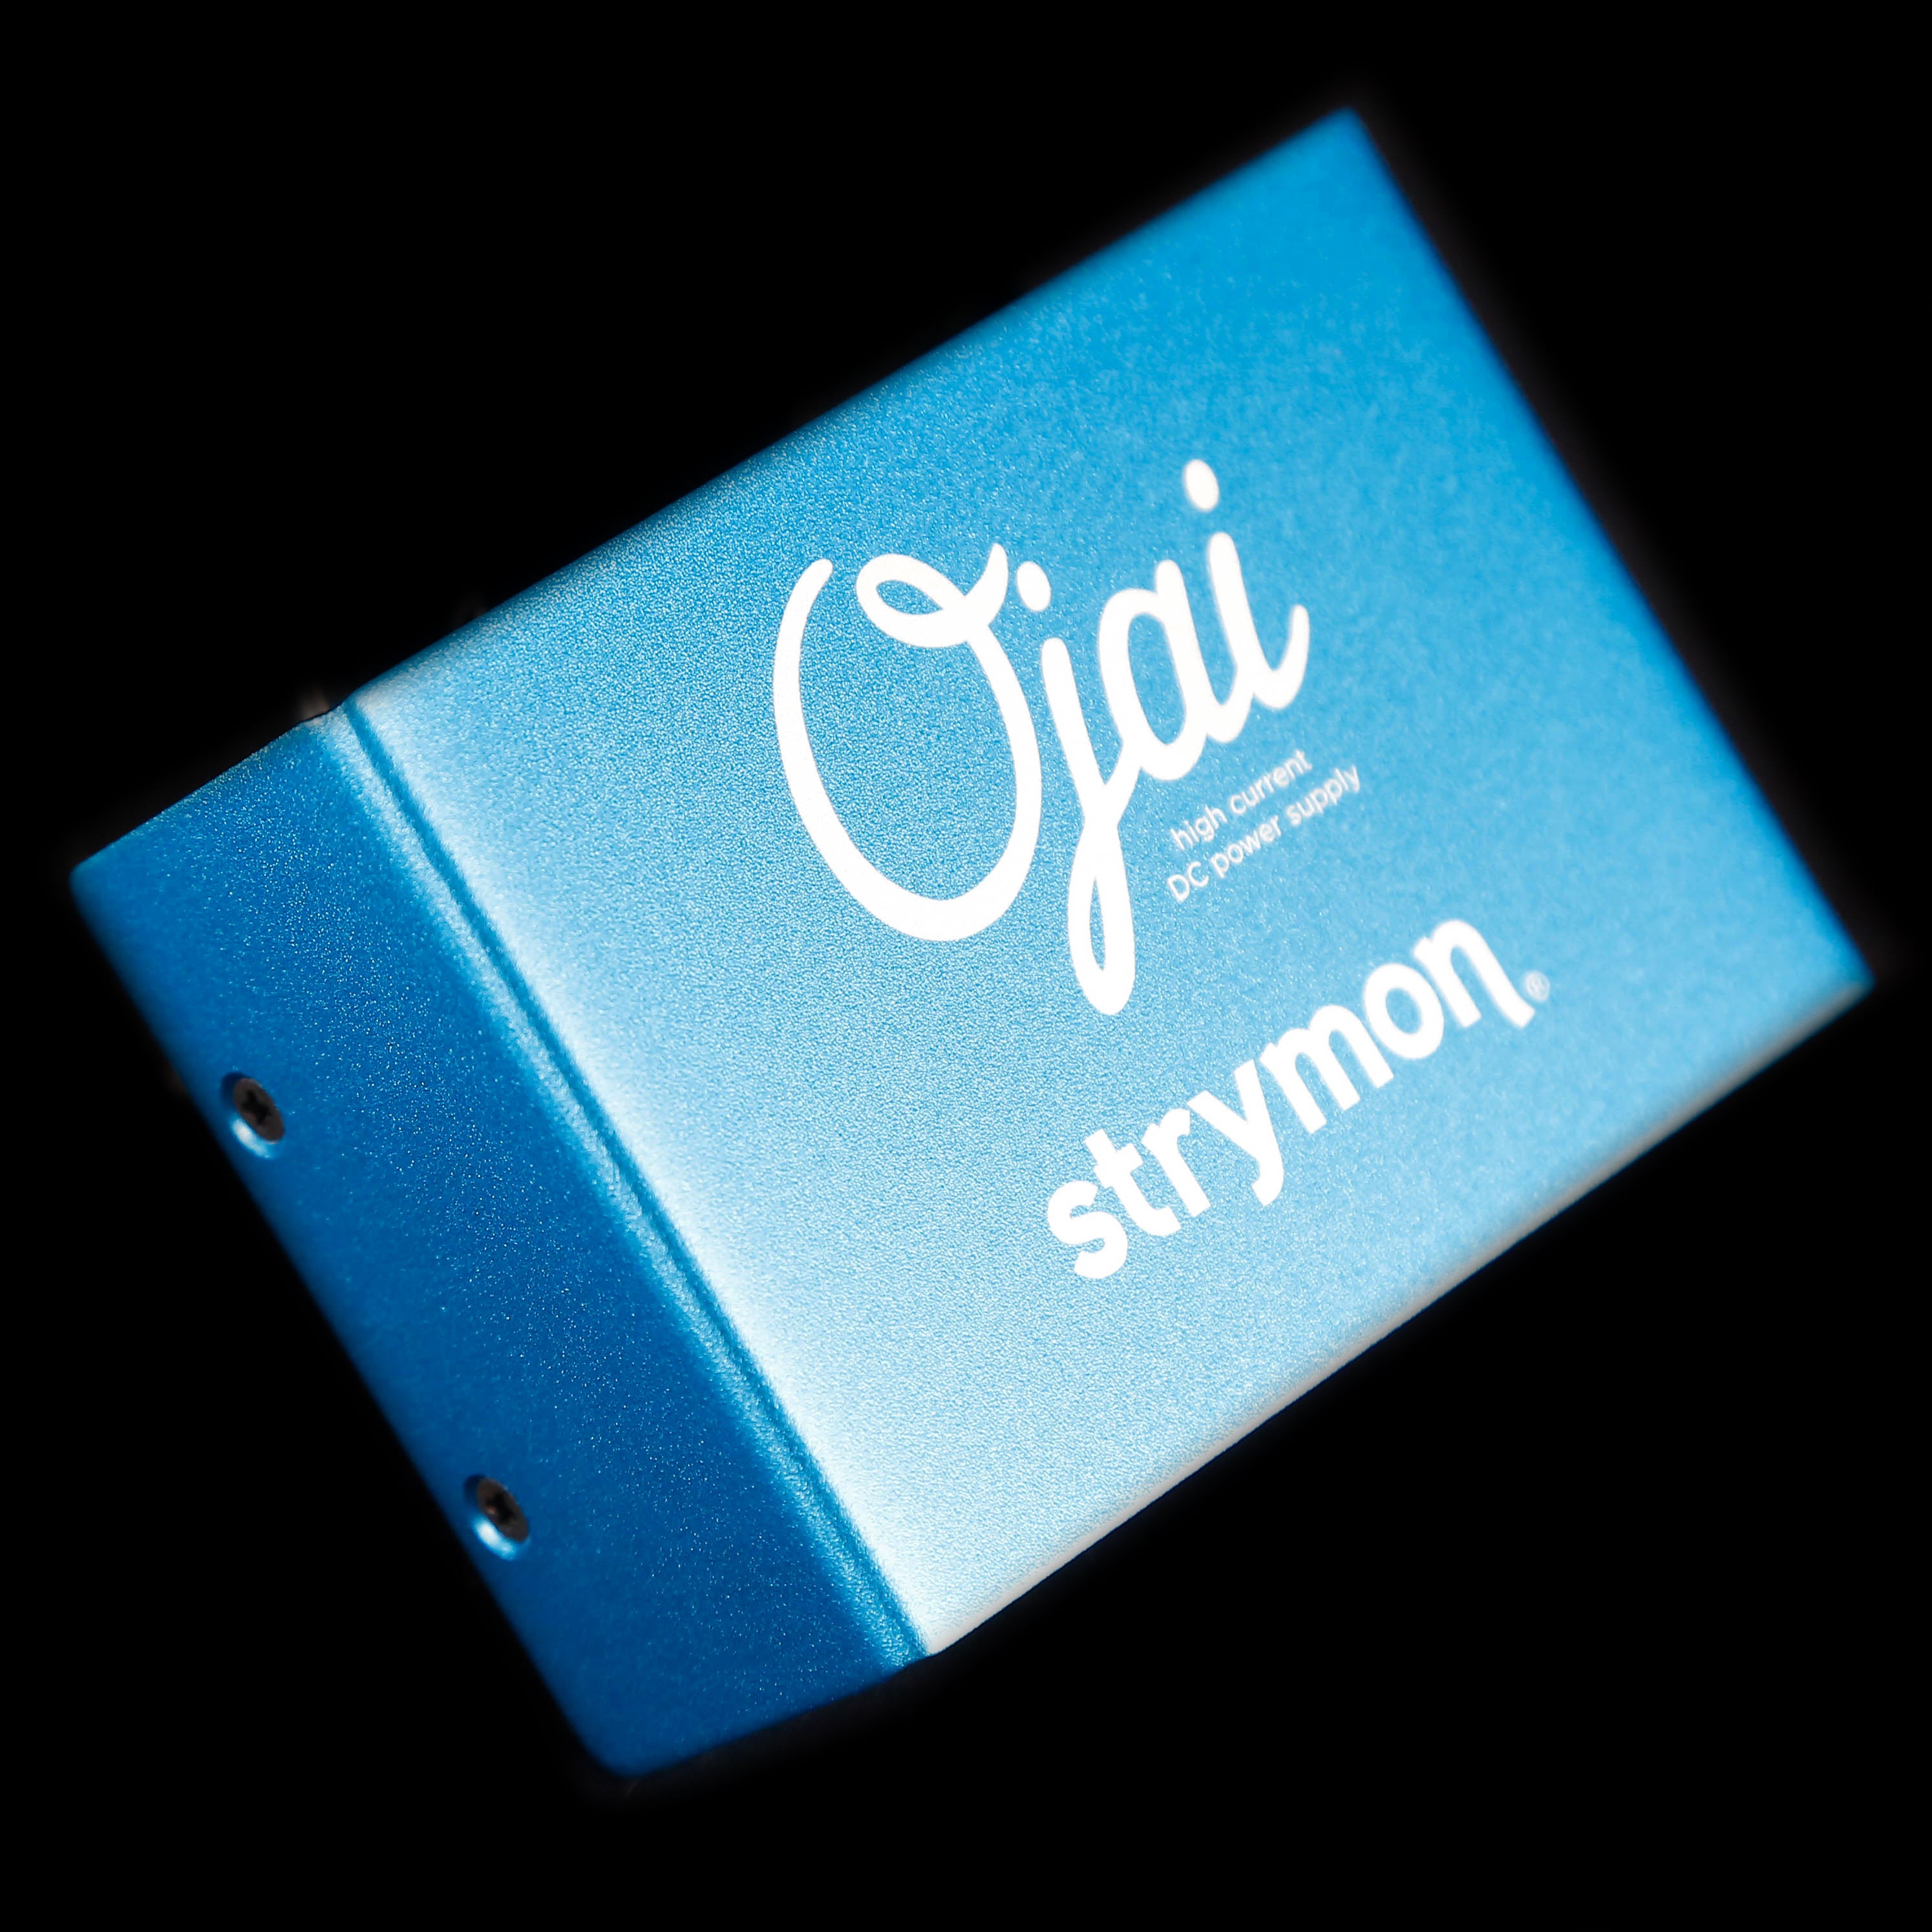 Strymon Ojai 5-output High Current Guitar Pedal Power Supply